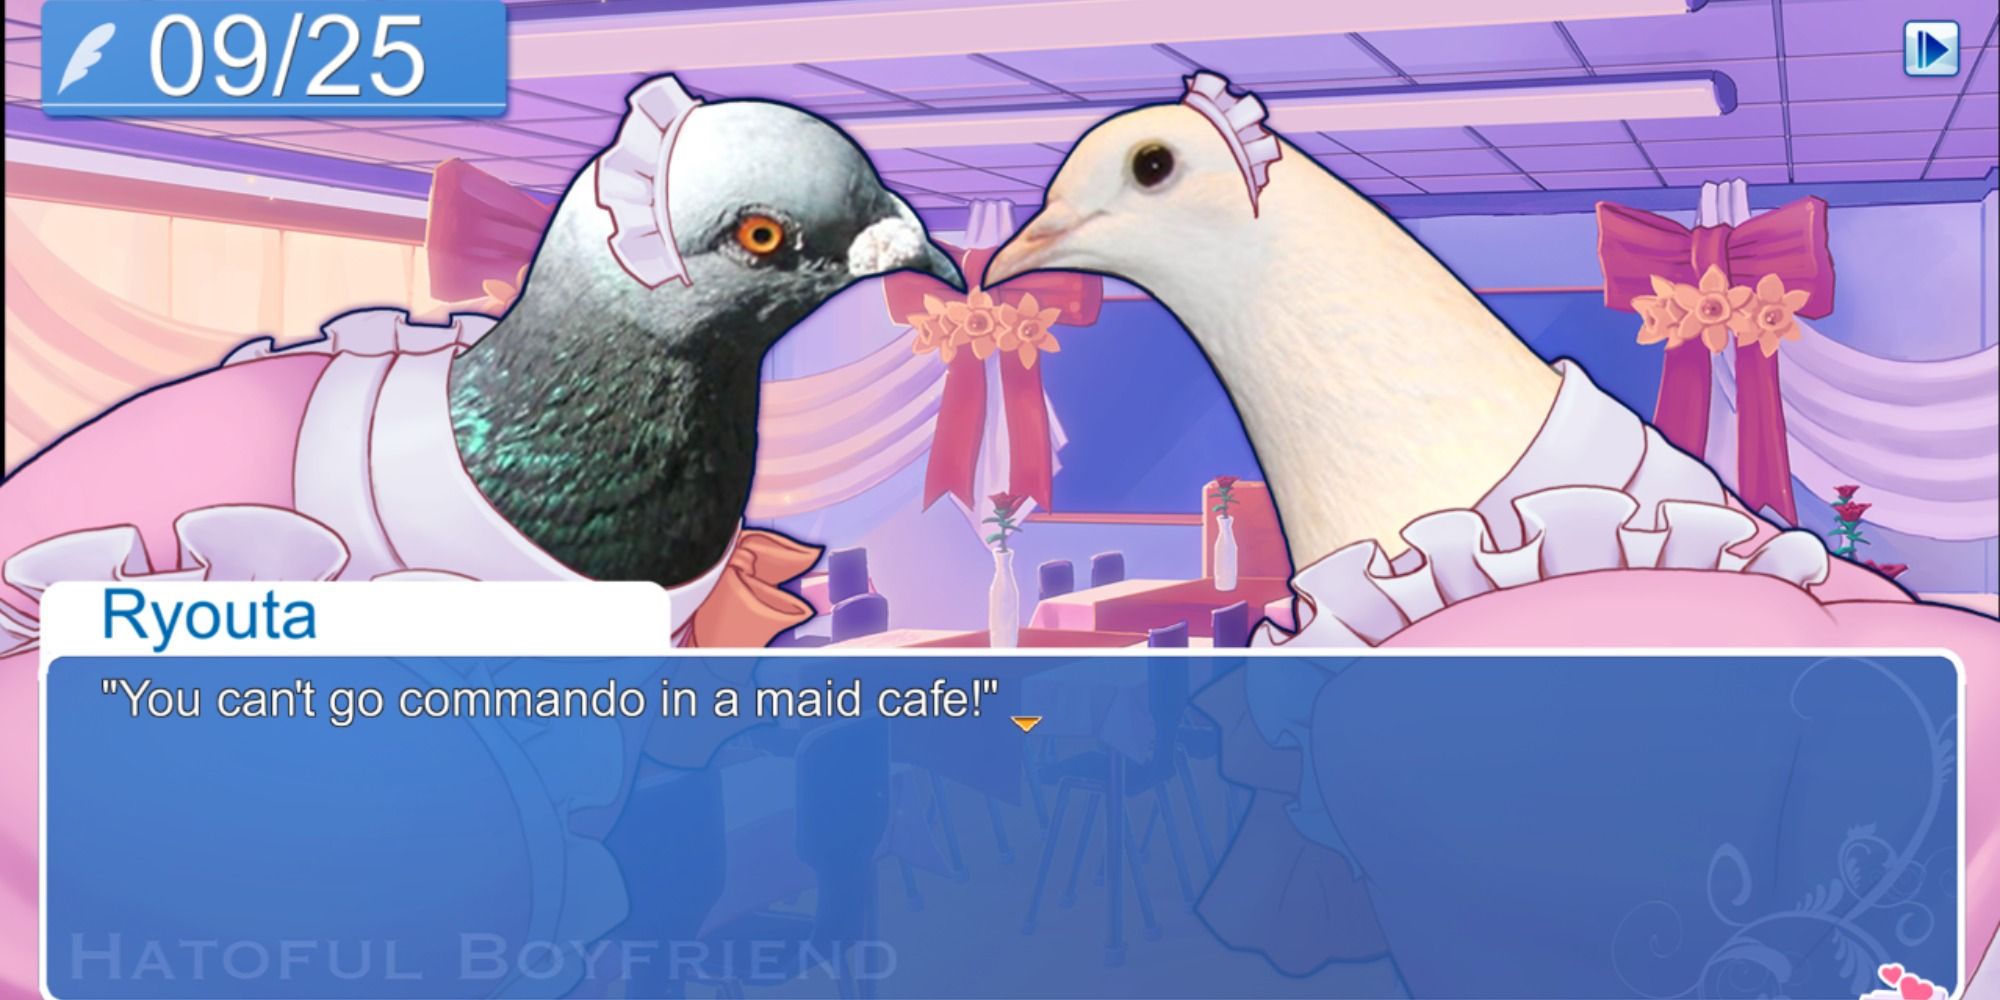 Hatoful Boyfriend conversation between two pigeons